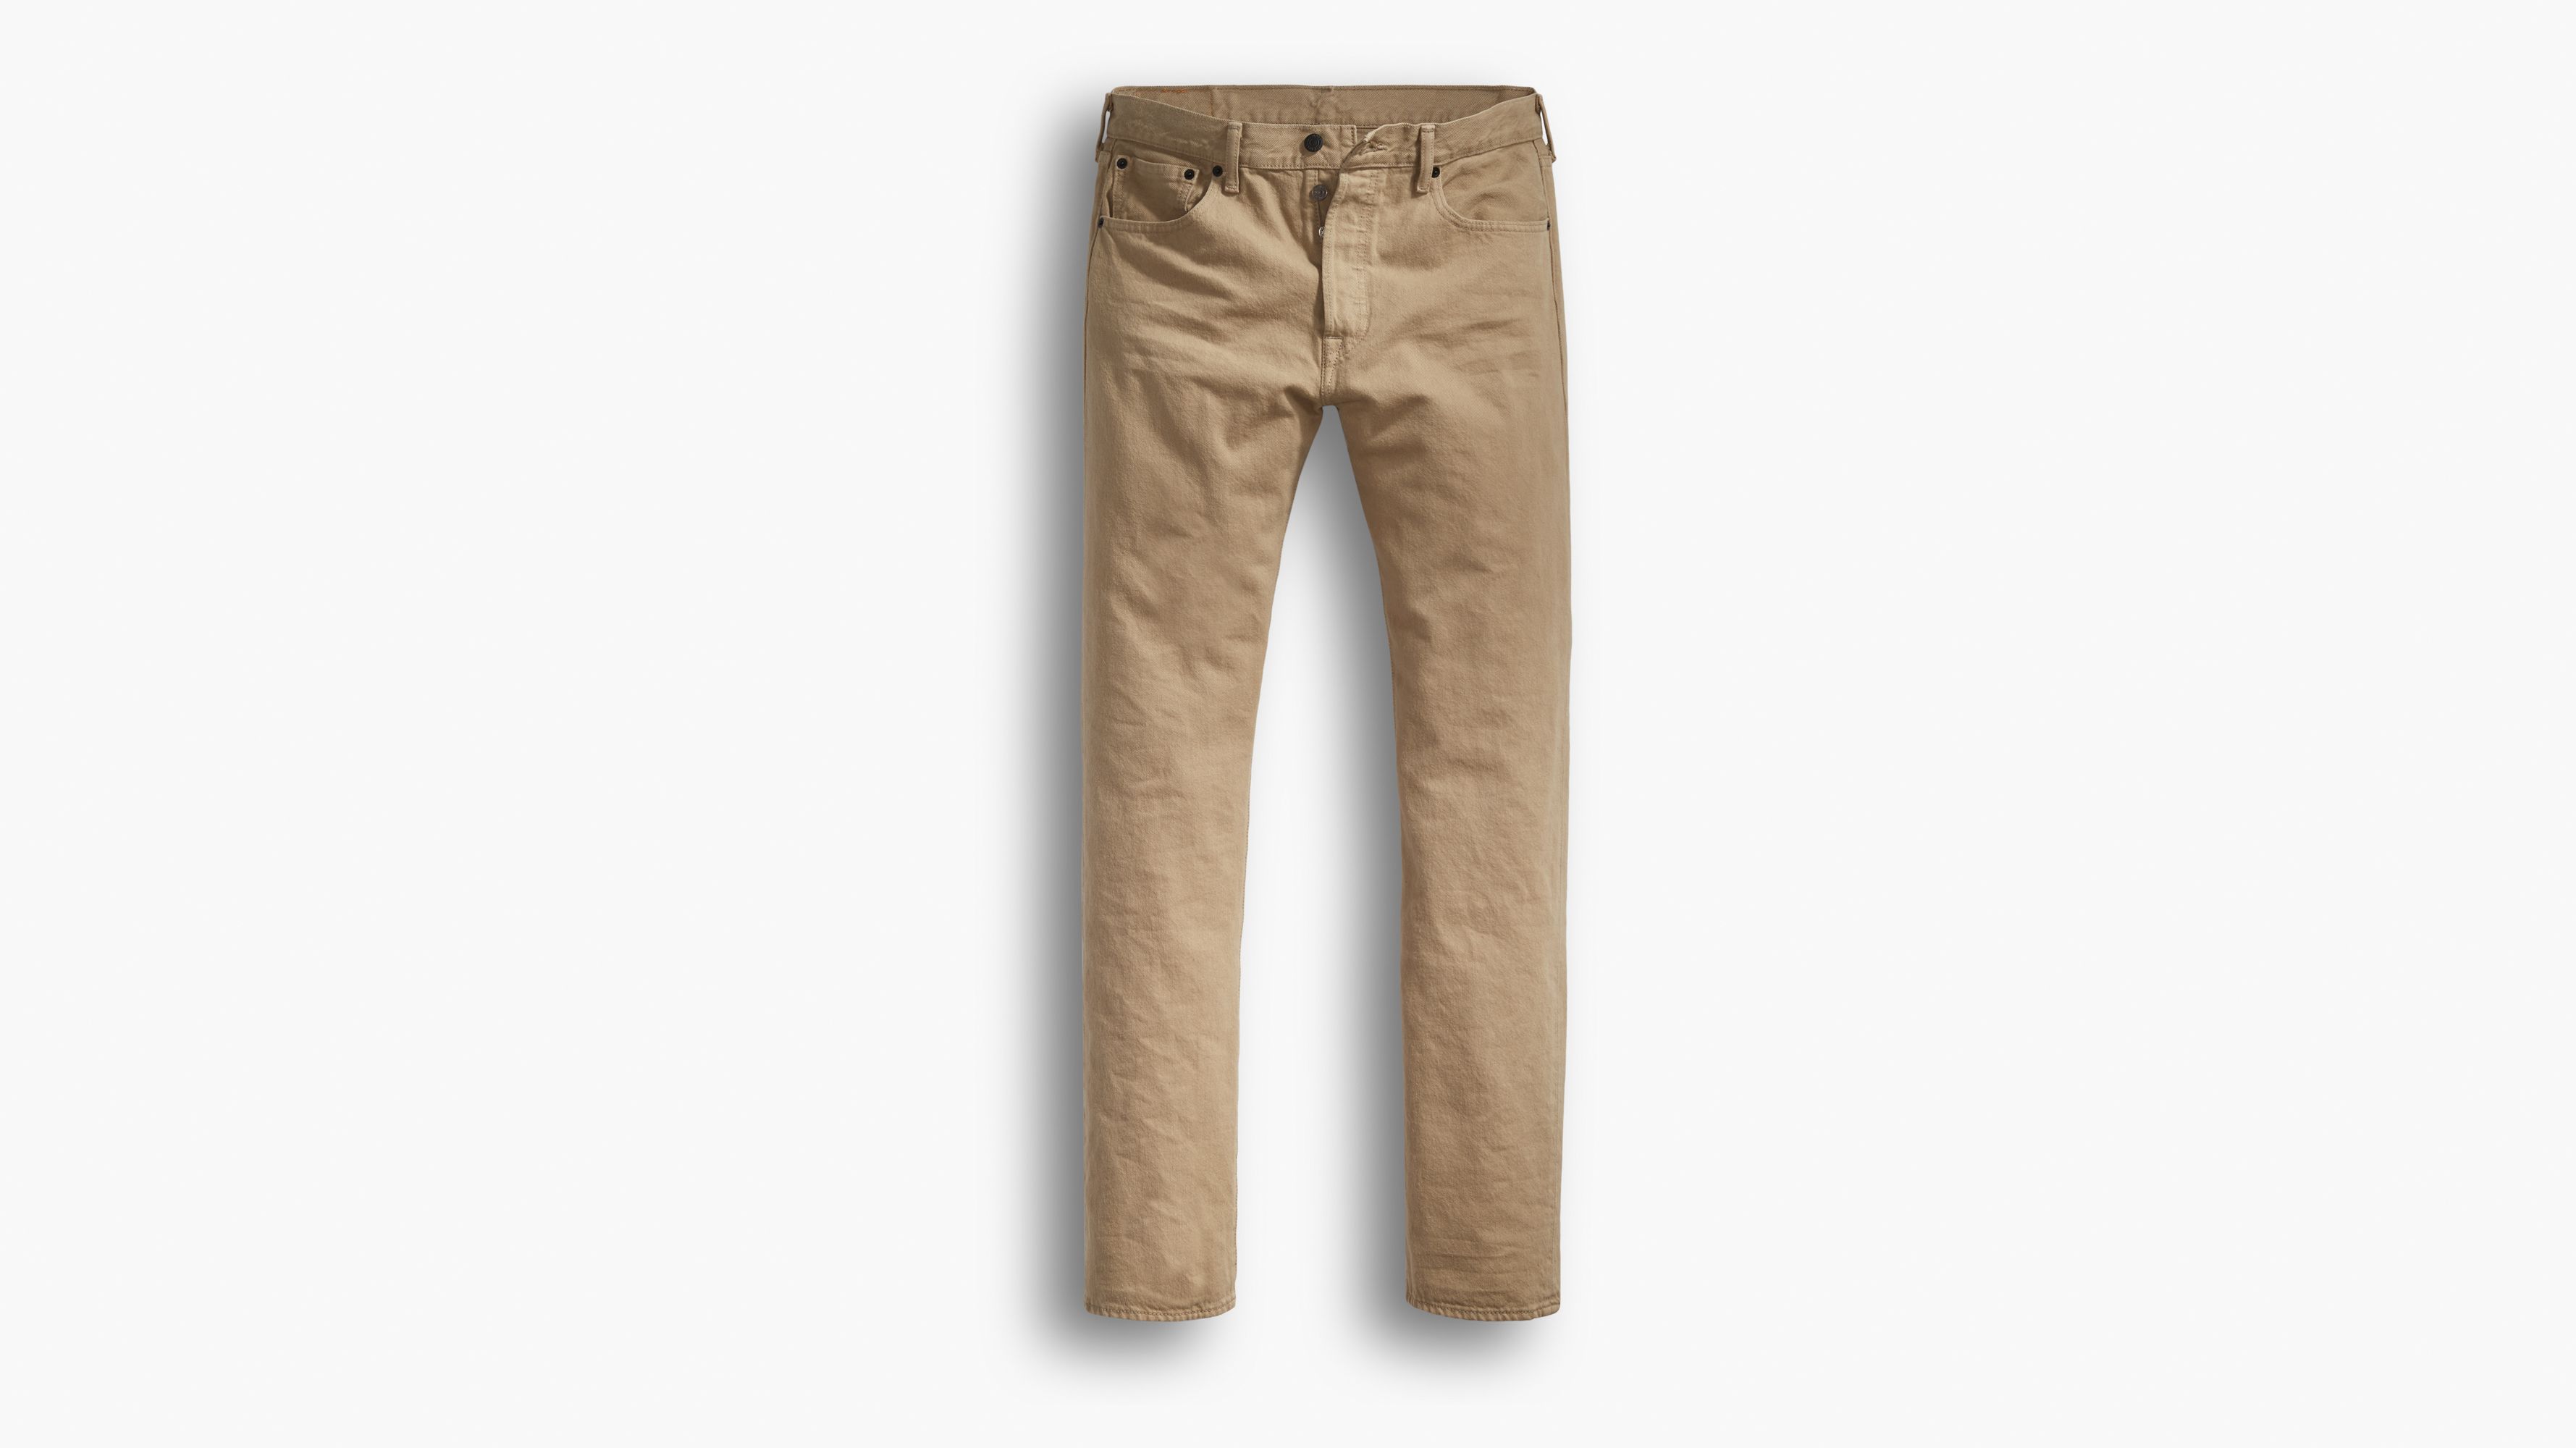 501 levi's khaki jeans| Enjoy free shipping | vtolaviations.com